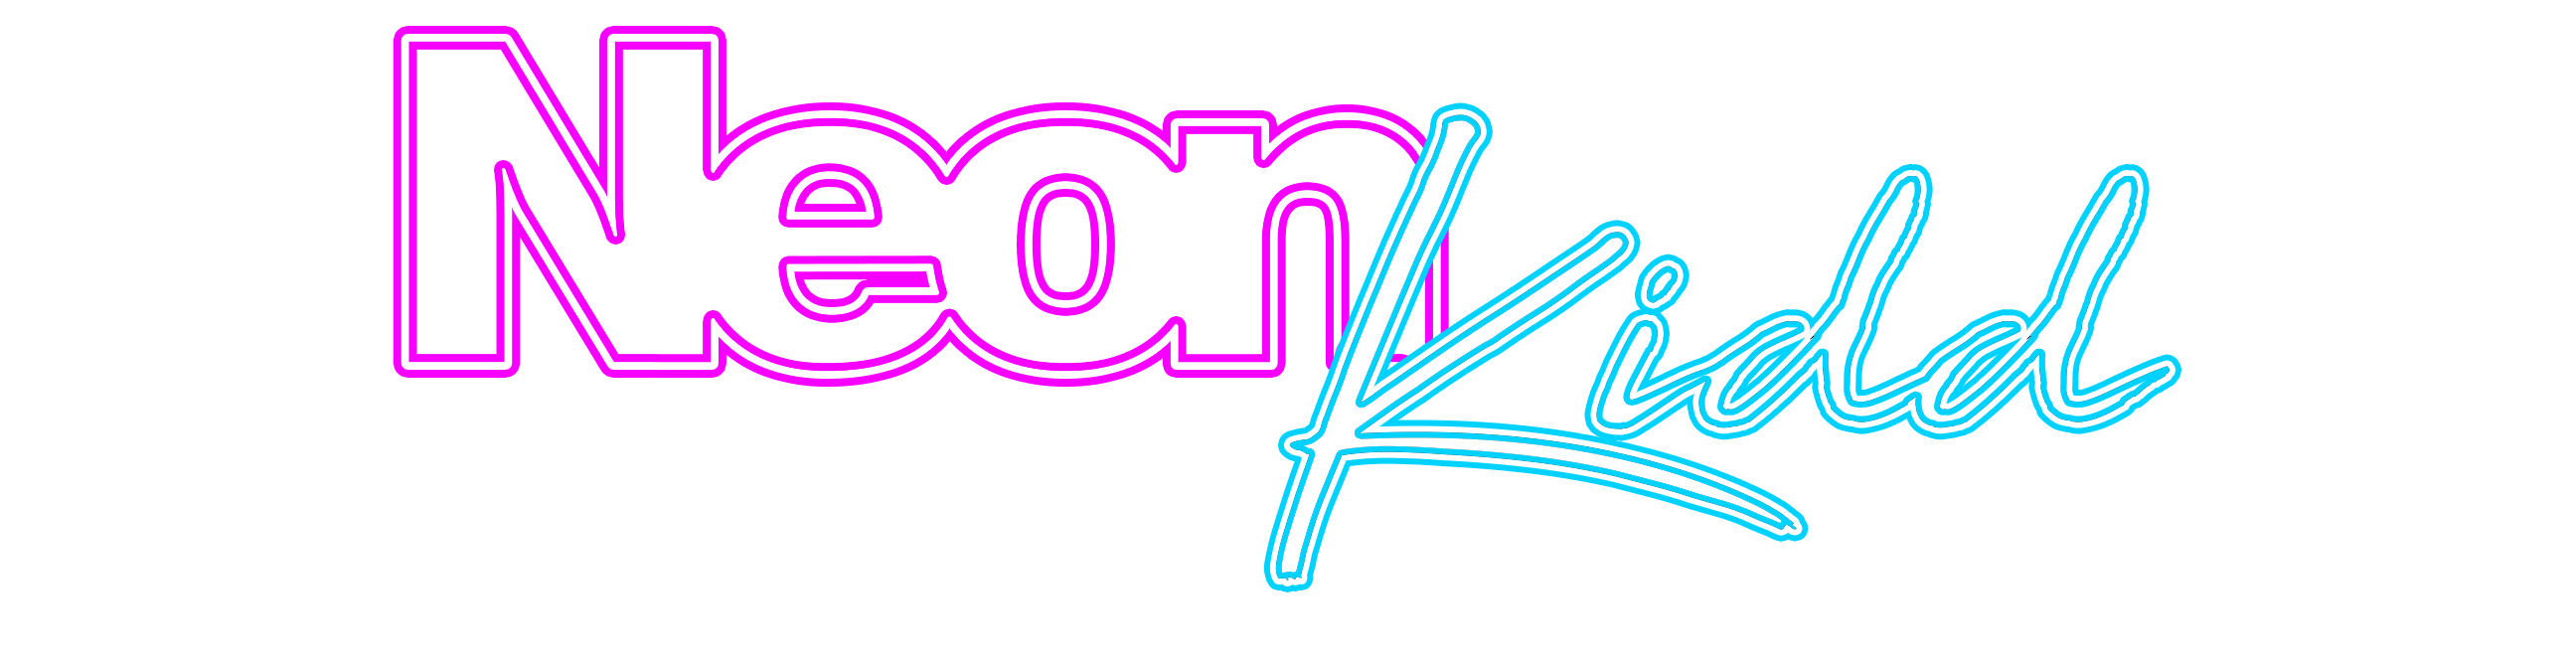 Neon kidd logo